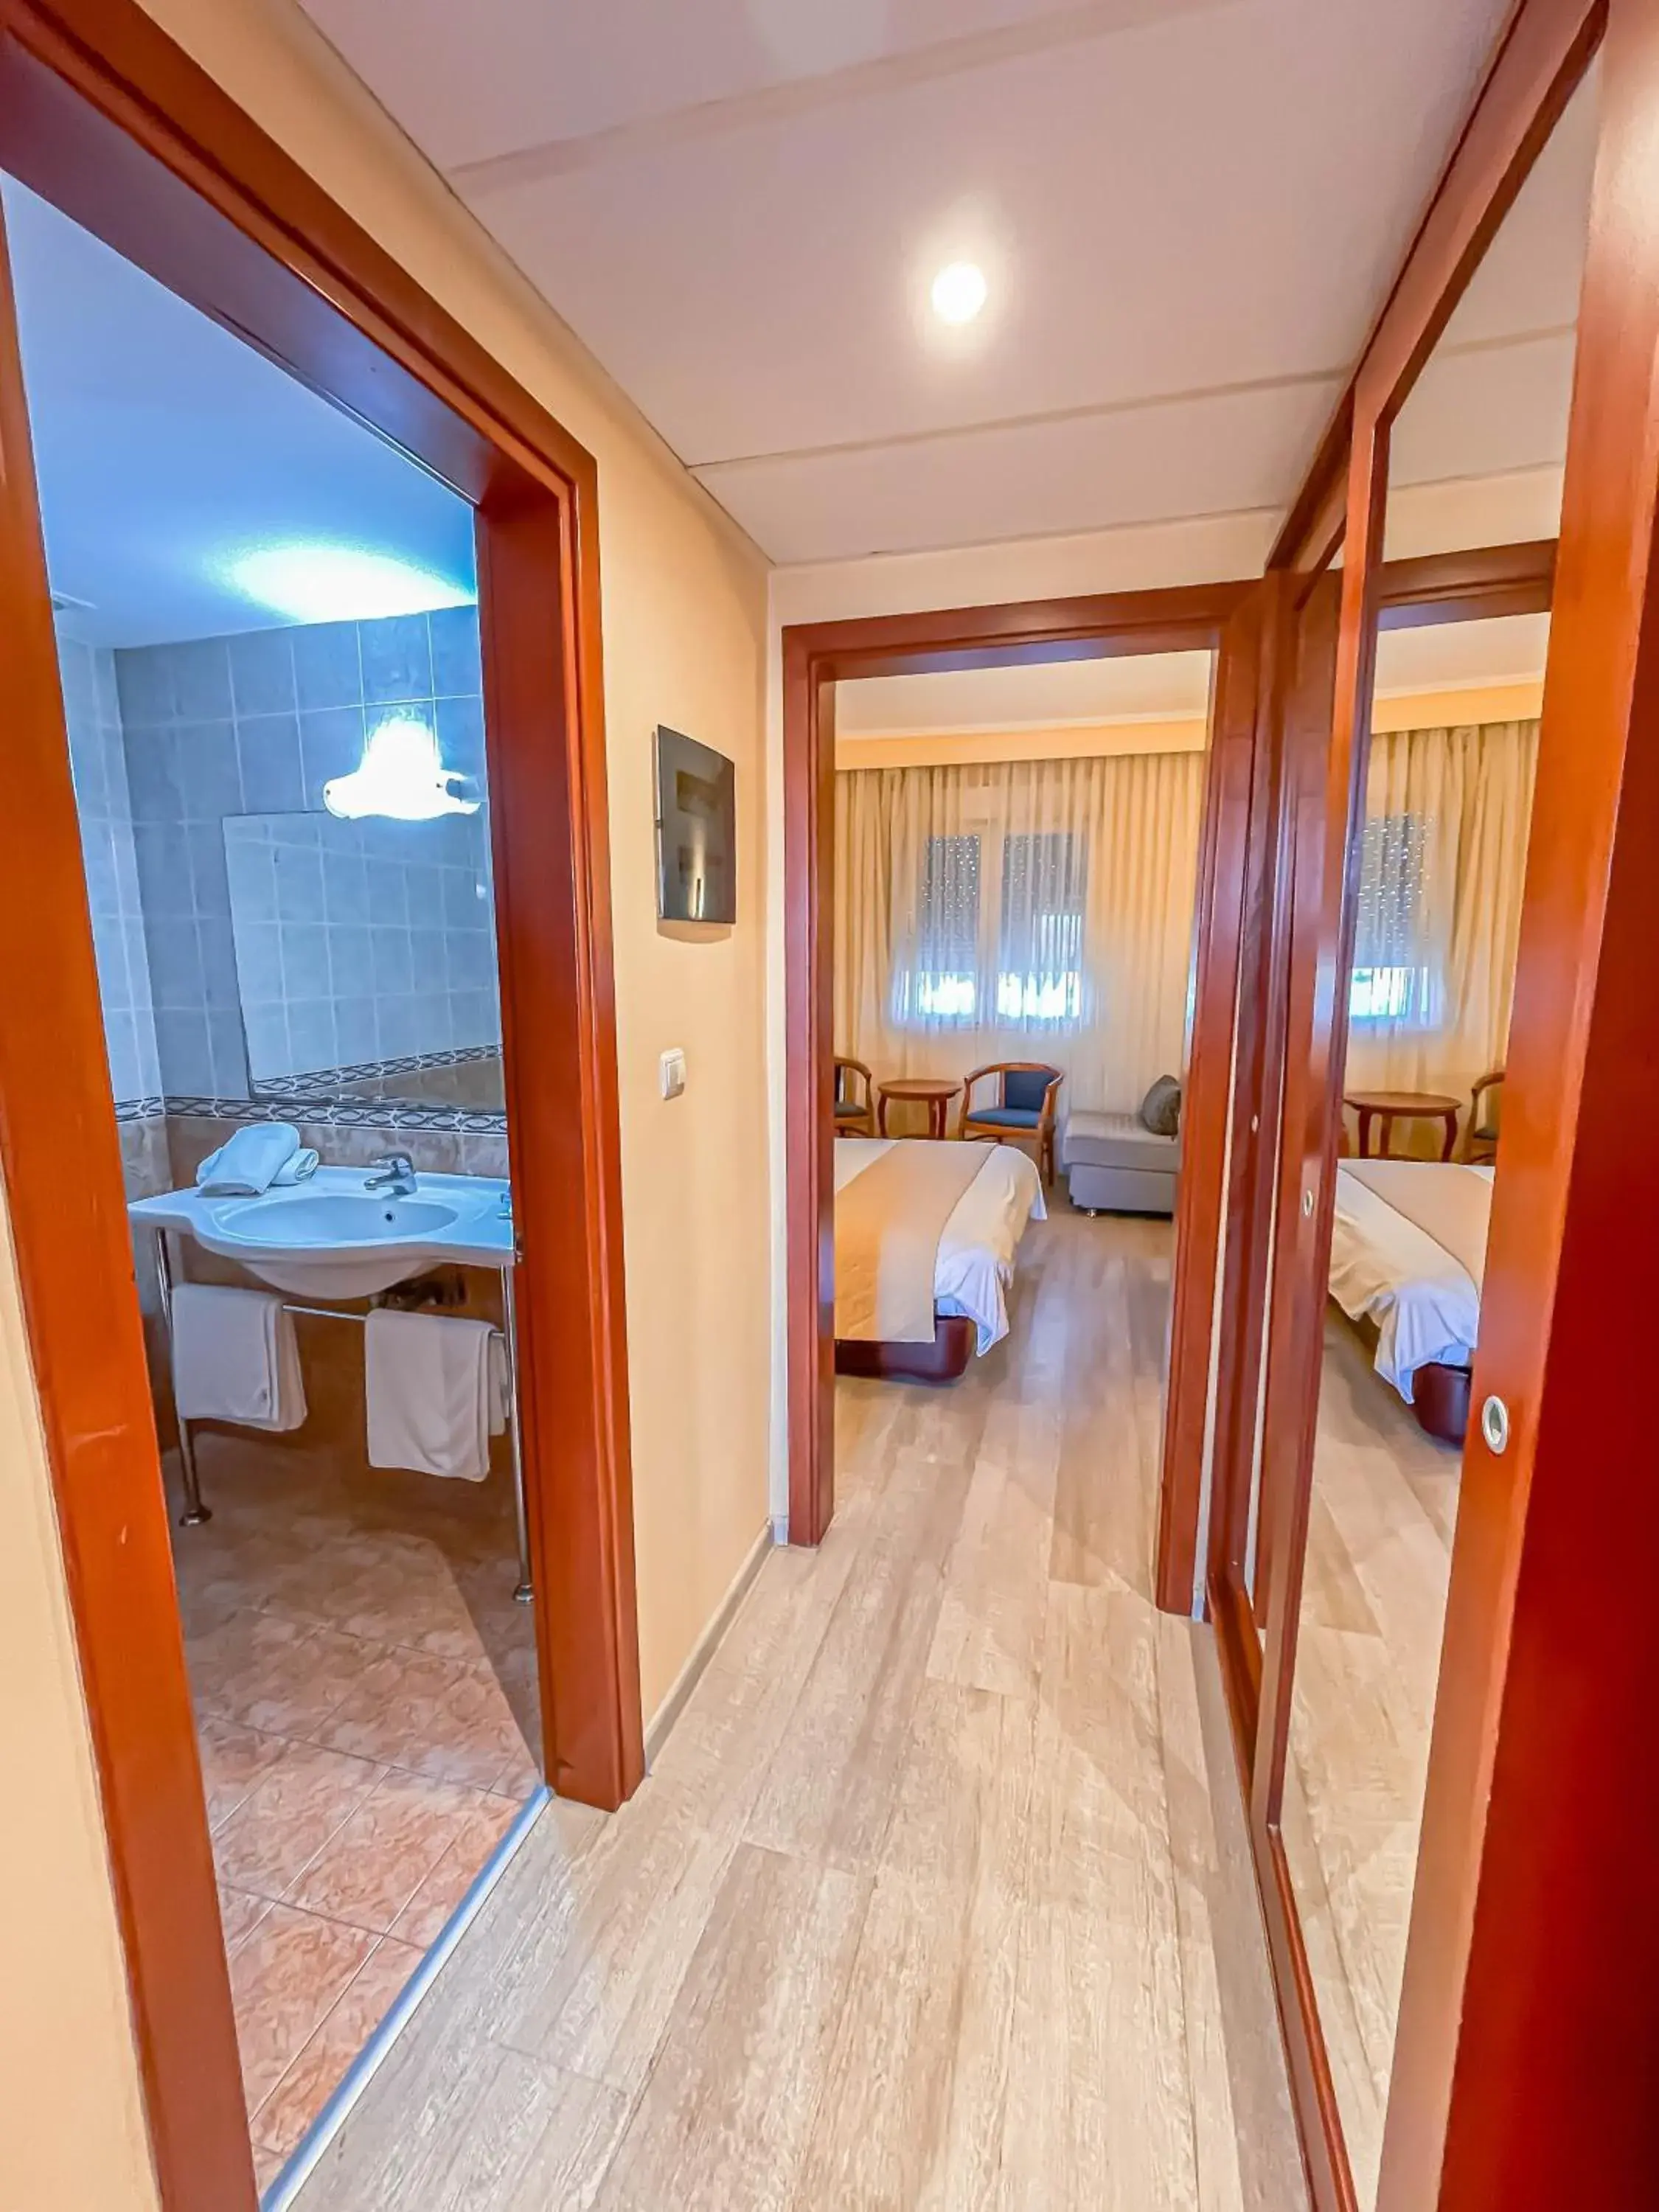 Photo of the whole room, Bathroom in Ambassador Hotel Thessaloniki